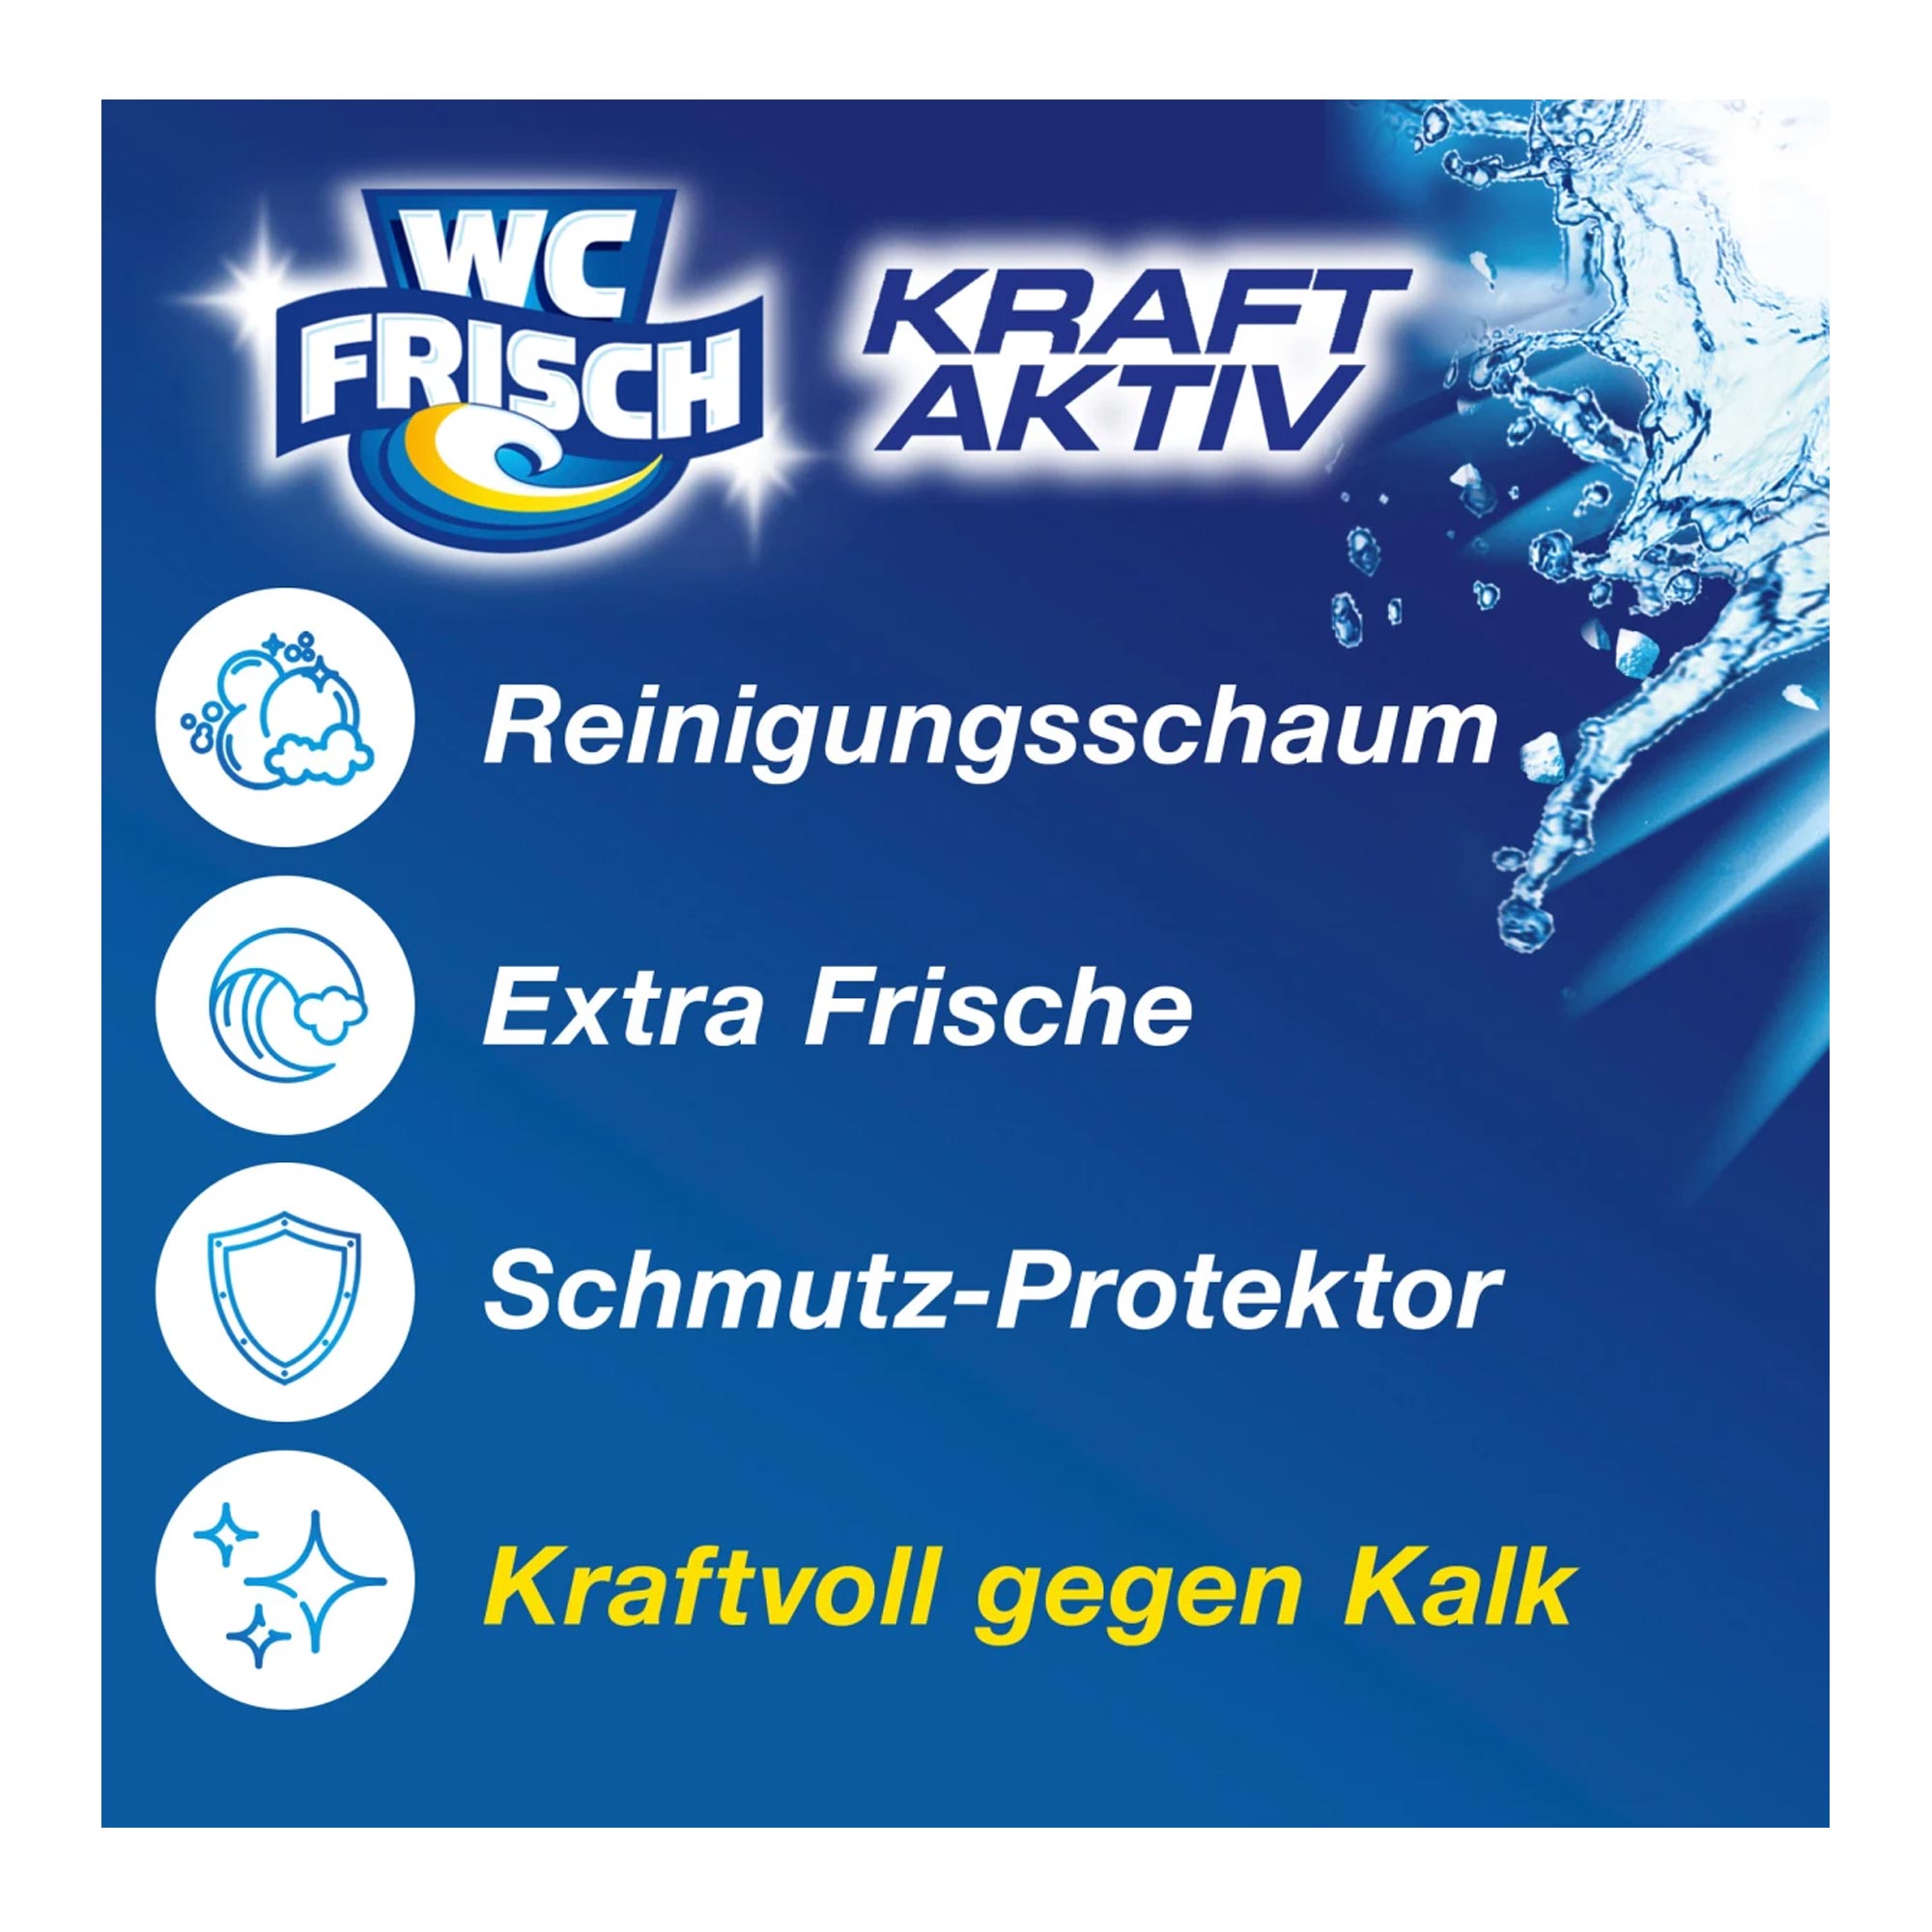 WC FRISCH Kraft Aktiv 150 g